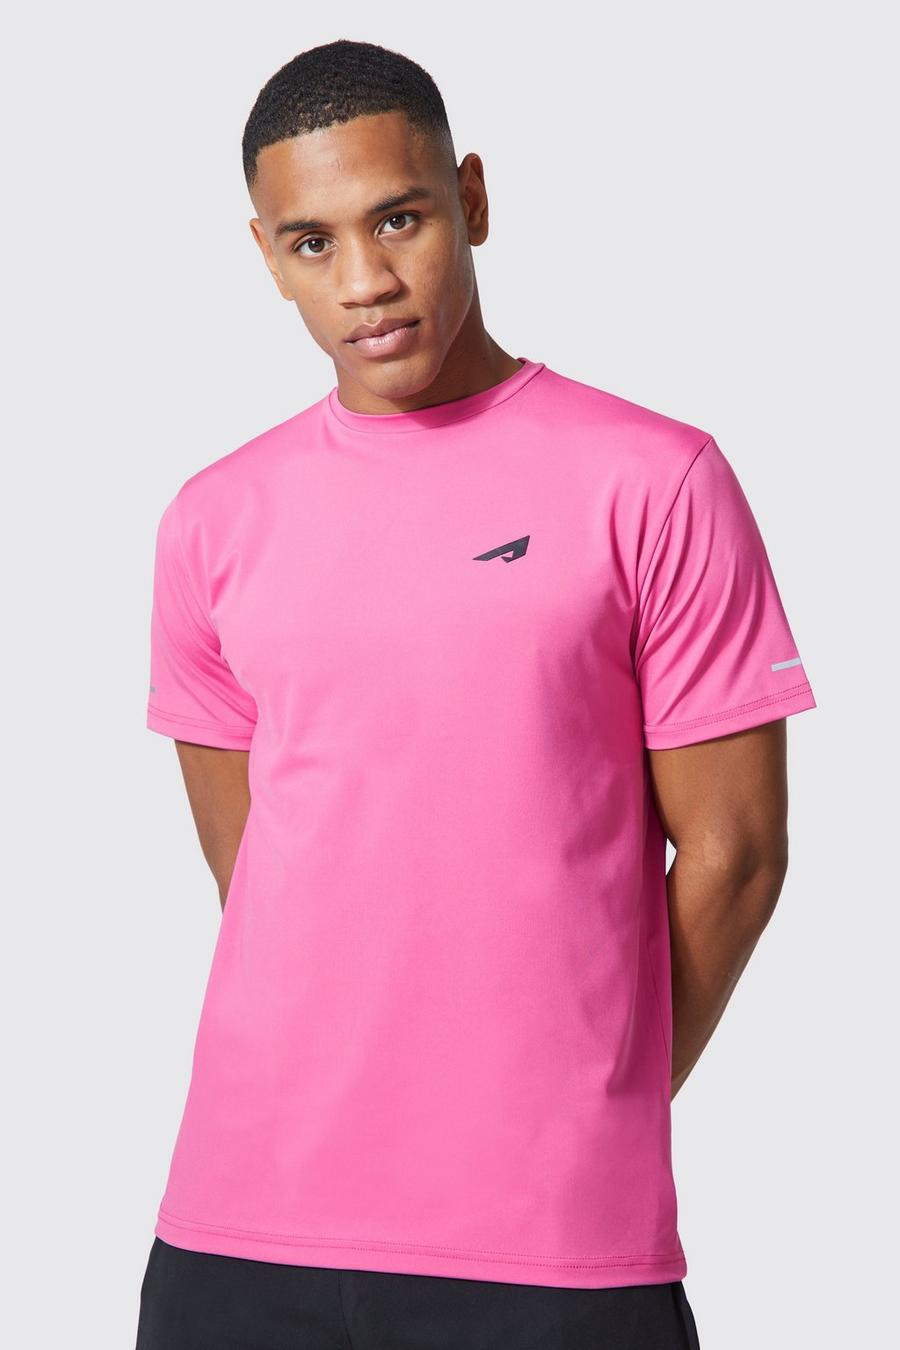 Performance T-Shirt mit Active Logo, Bright pink rose